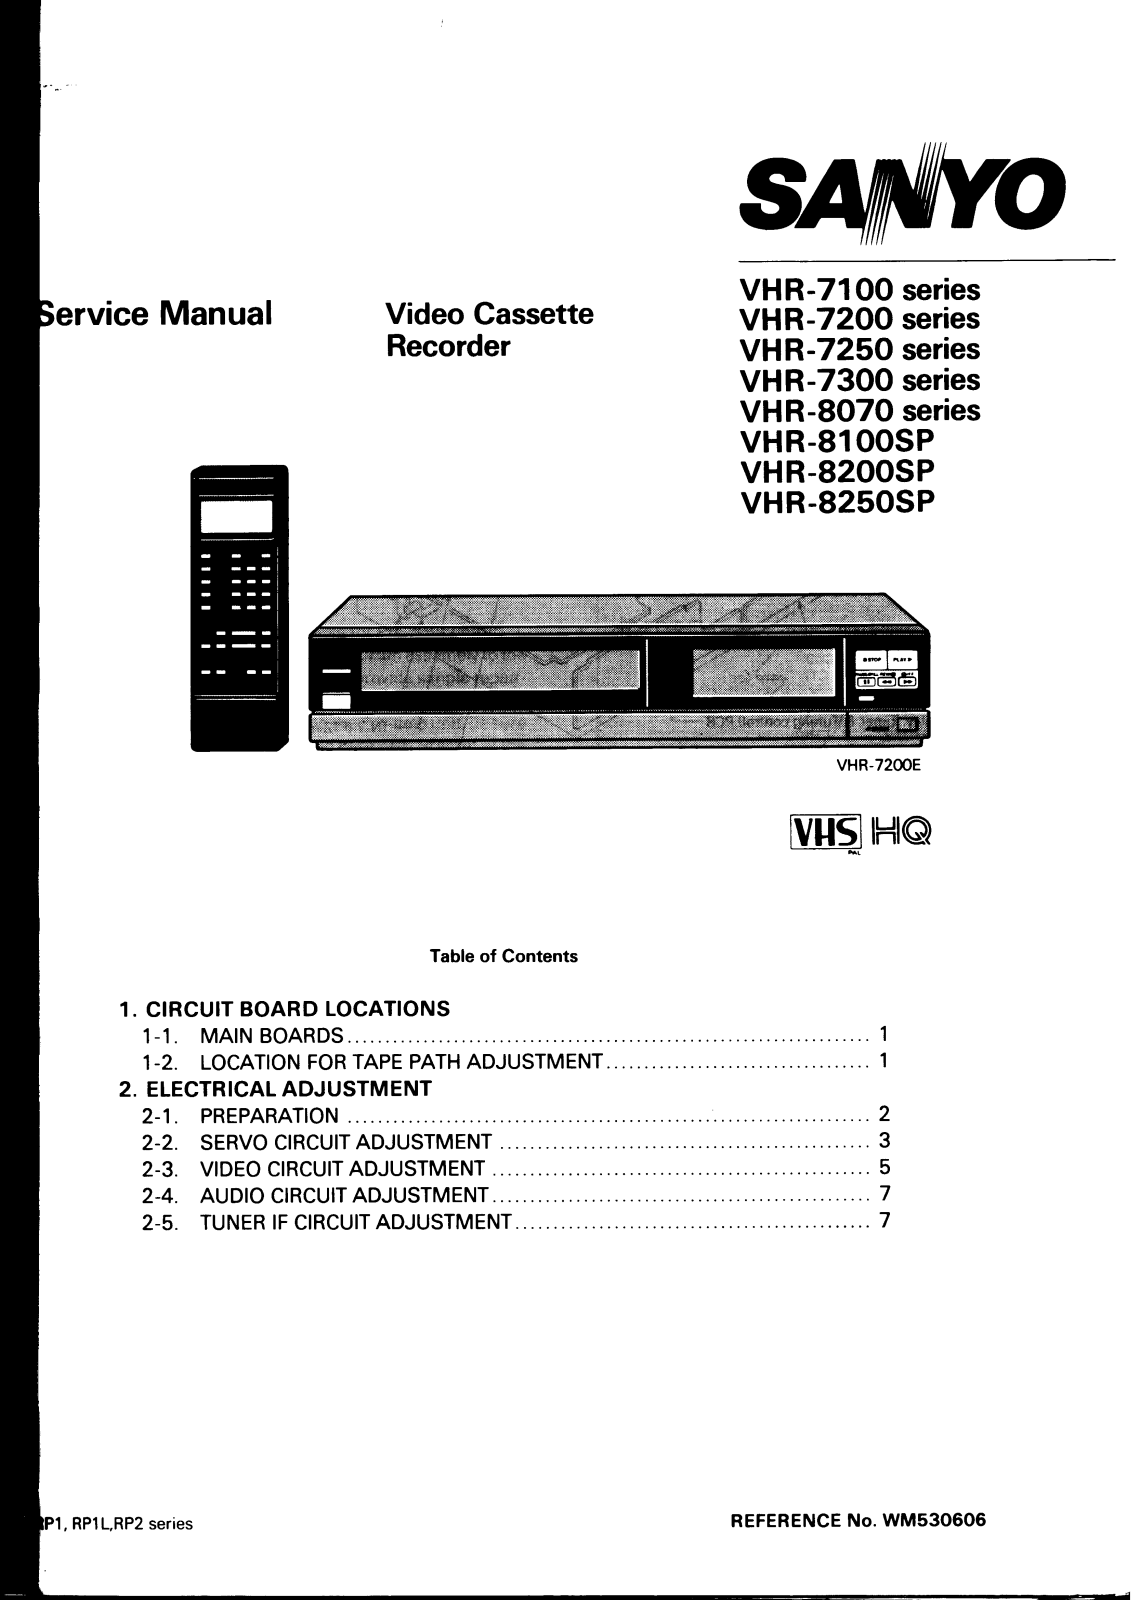 Sanyo VHR-8250sp, VHR-8100sp, VHR-8200sp, VHR-8070, VHR-7250 Service Manual